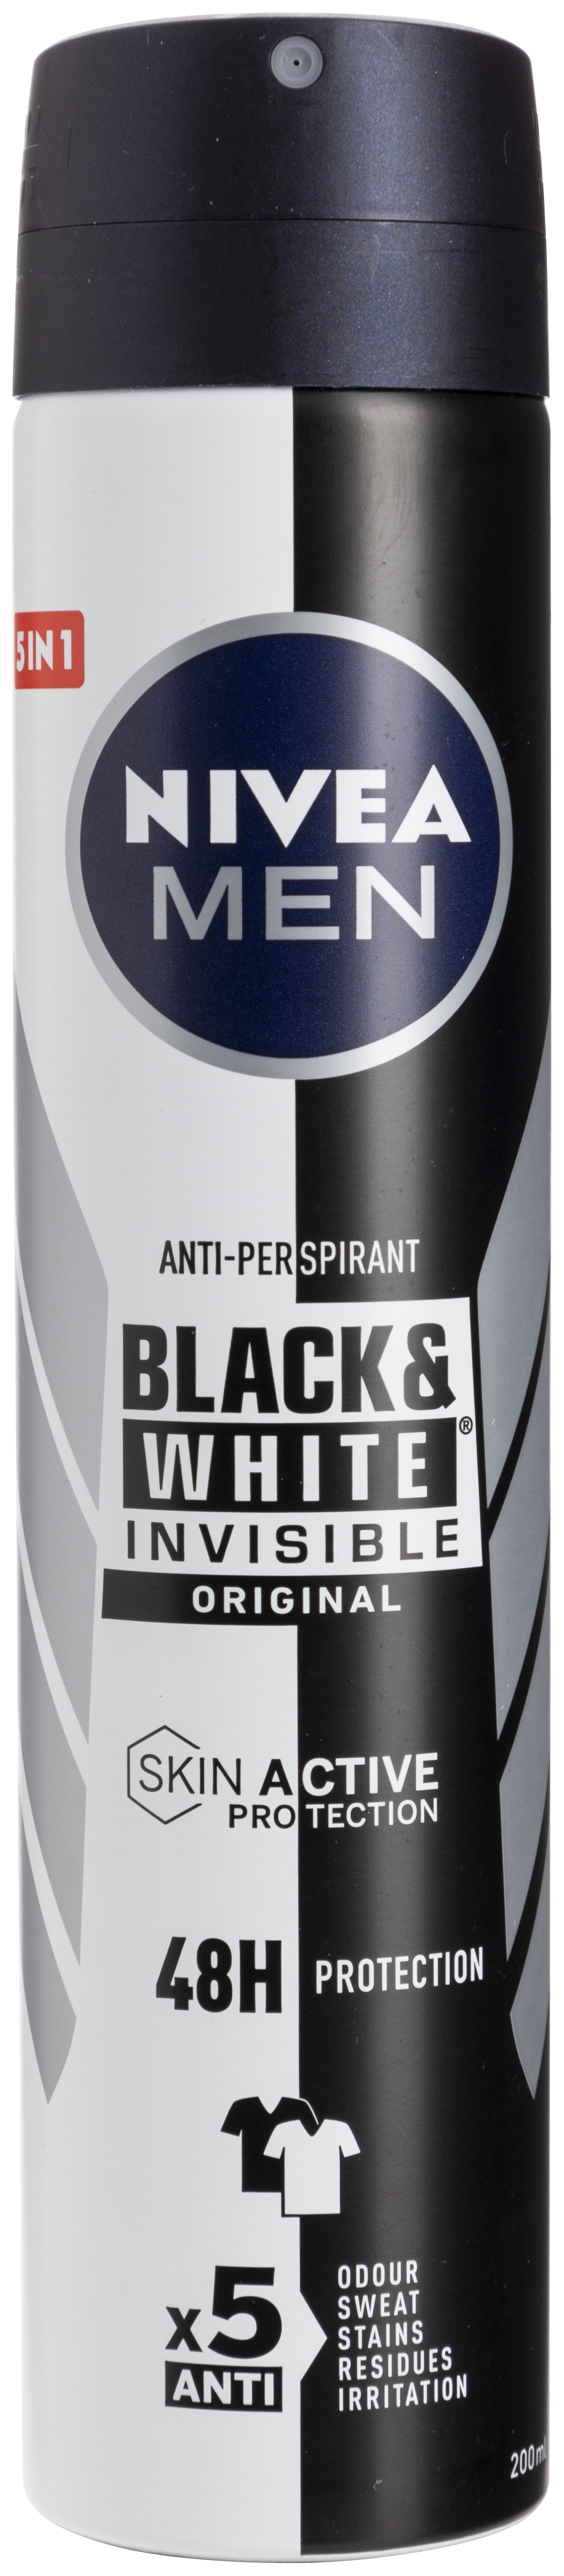 ANTI-TRANSPIRANT BLACK&WHITE INVISIBLE ORIGINAL 48H